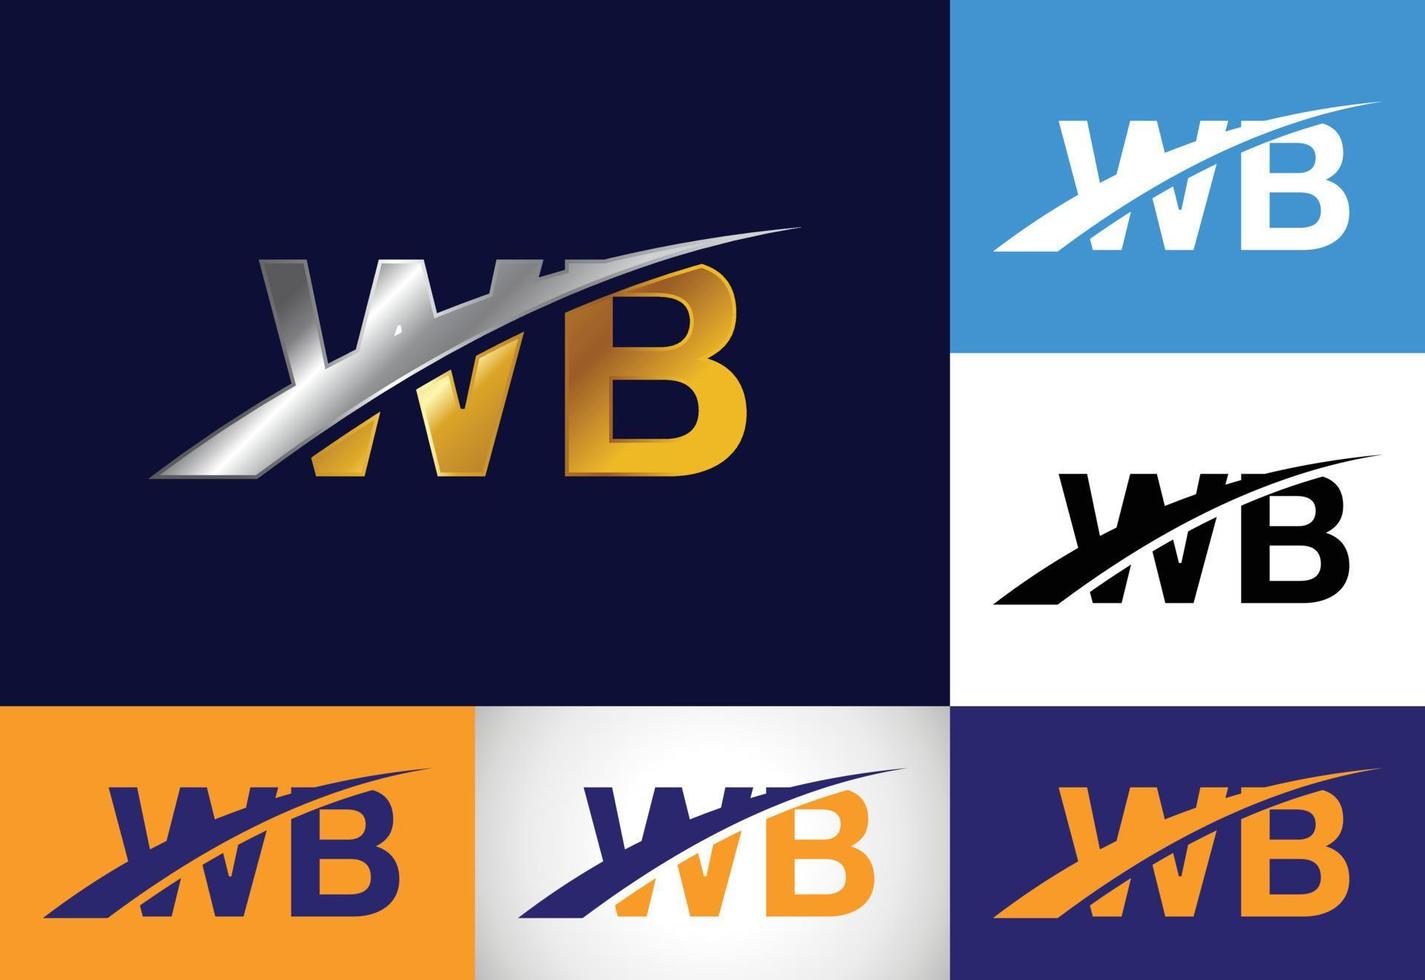 Initial Monogram Letter W B Logo Design. Graphic Alphabet Symbol For Corporate Business Identity vector